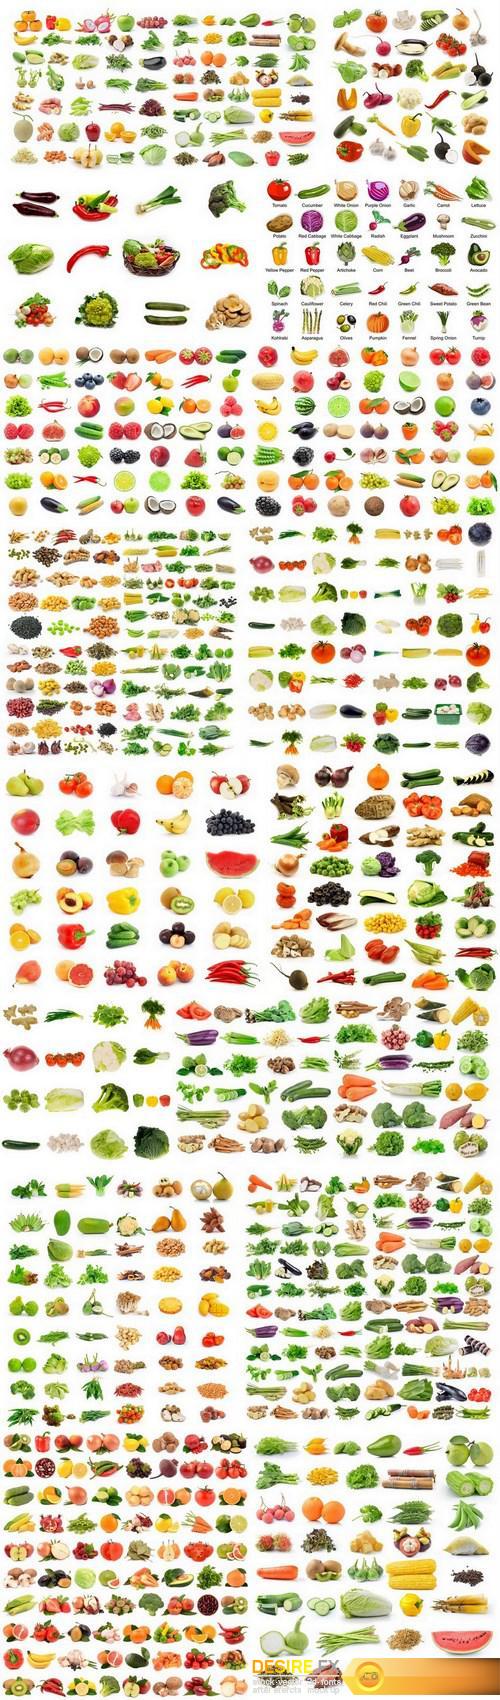 Fruit and Vegetable Isolated on White Background - 16xUHQ JPEG Photo Stock